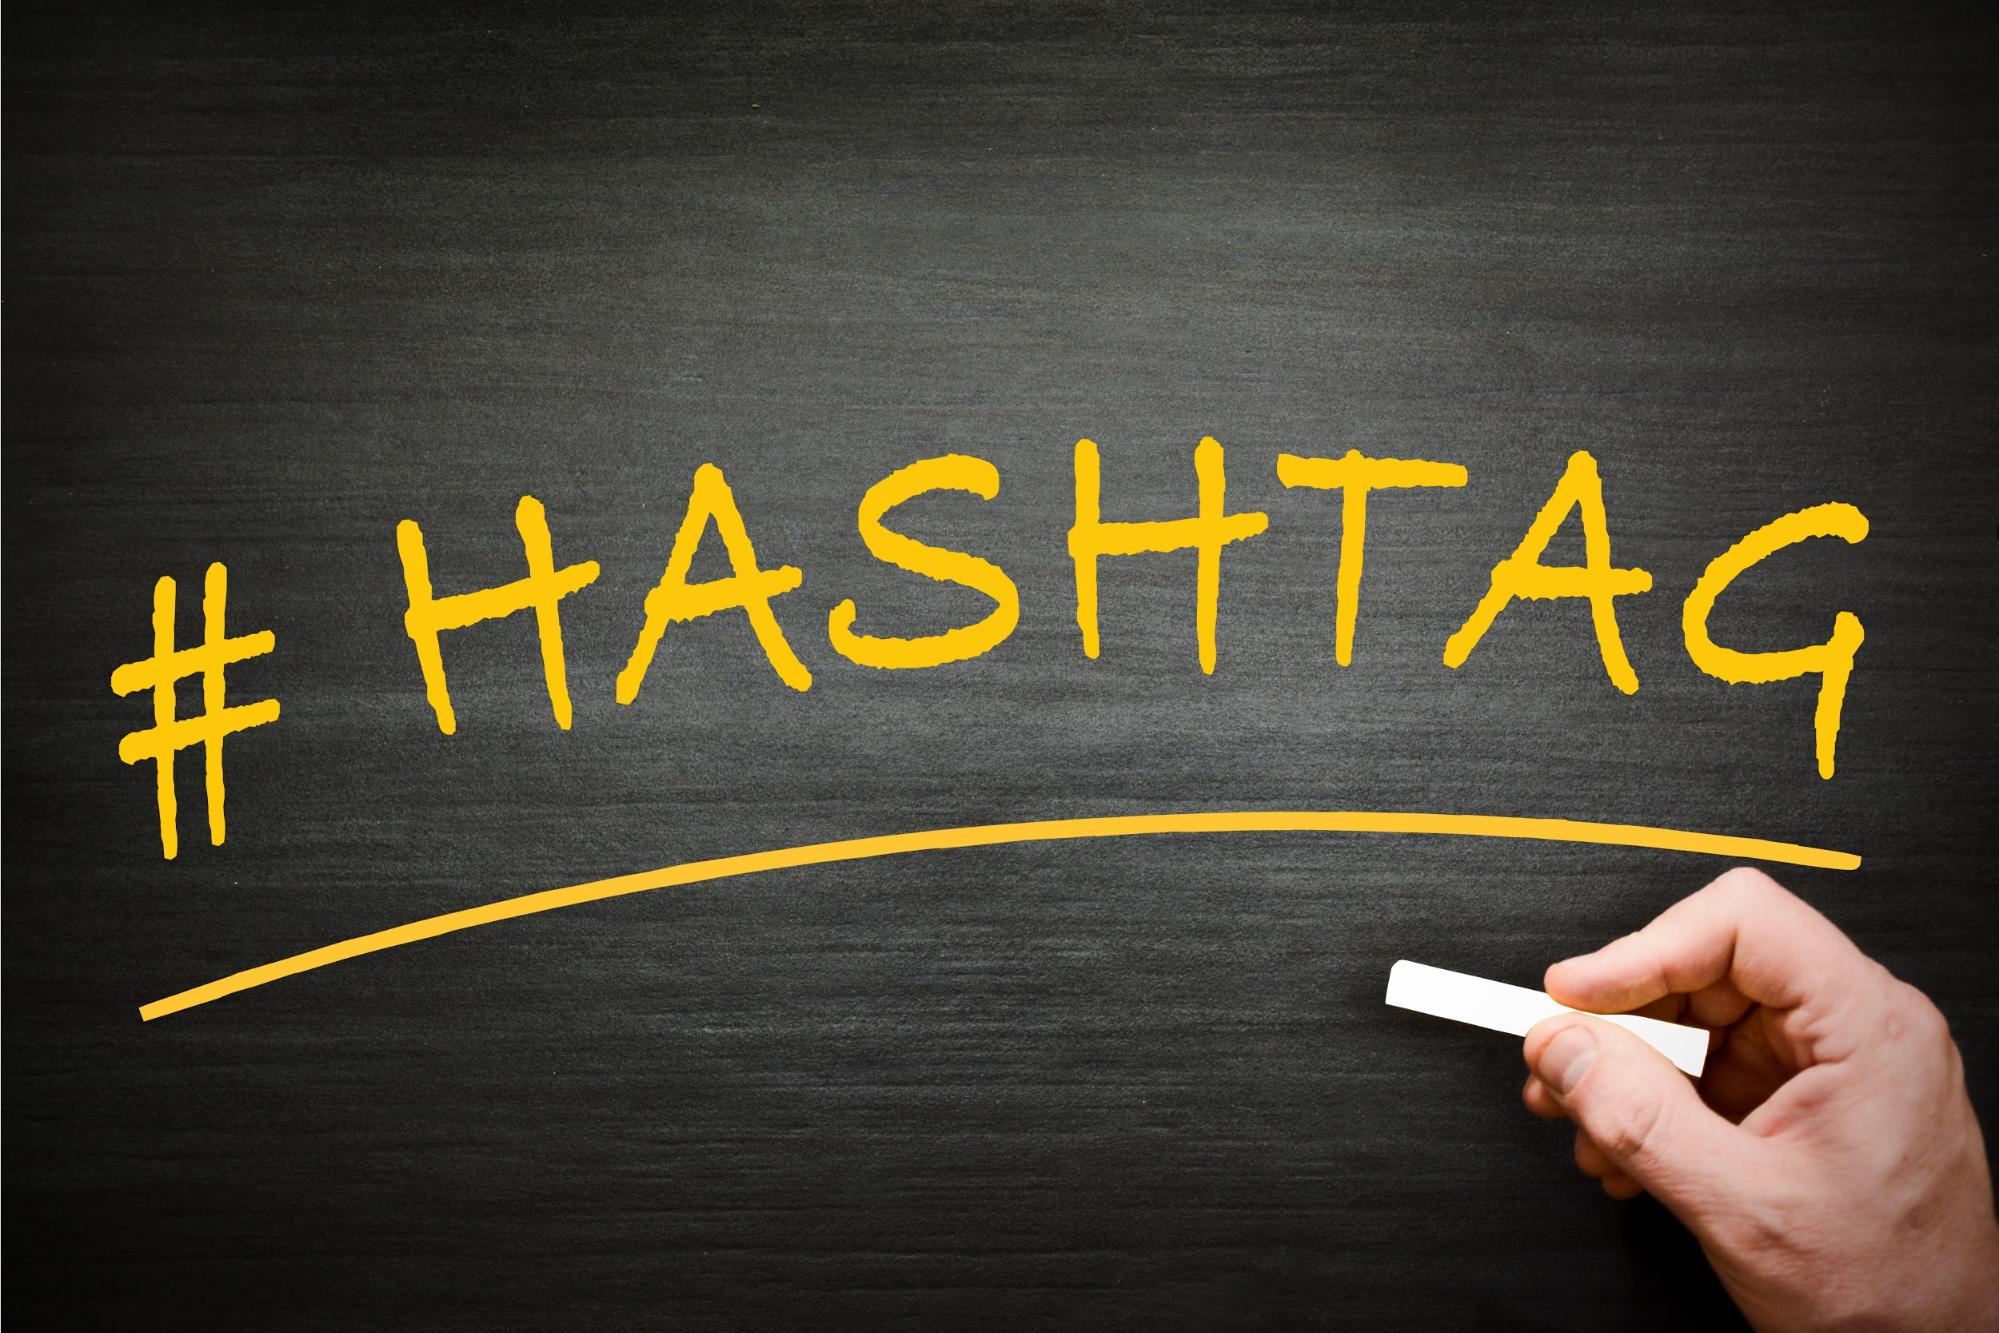 5. Use Twitter hashtags.